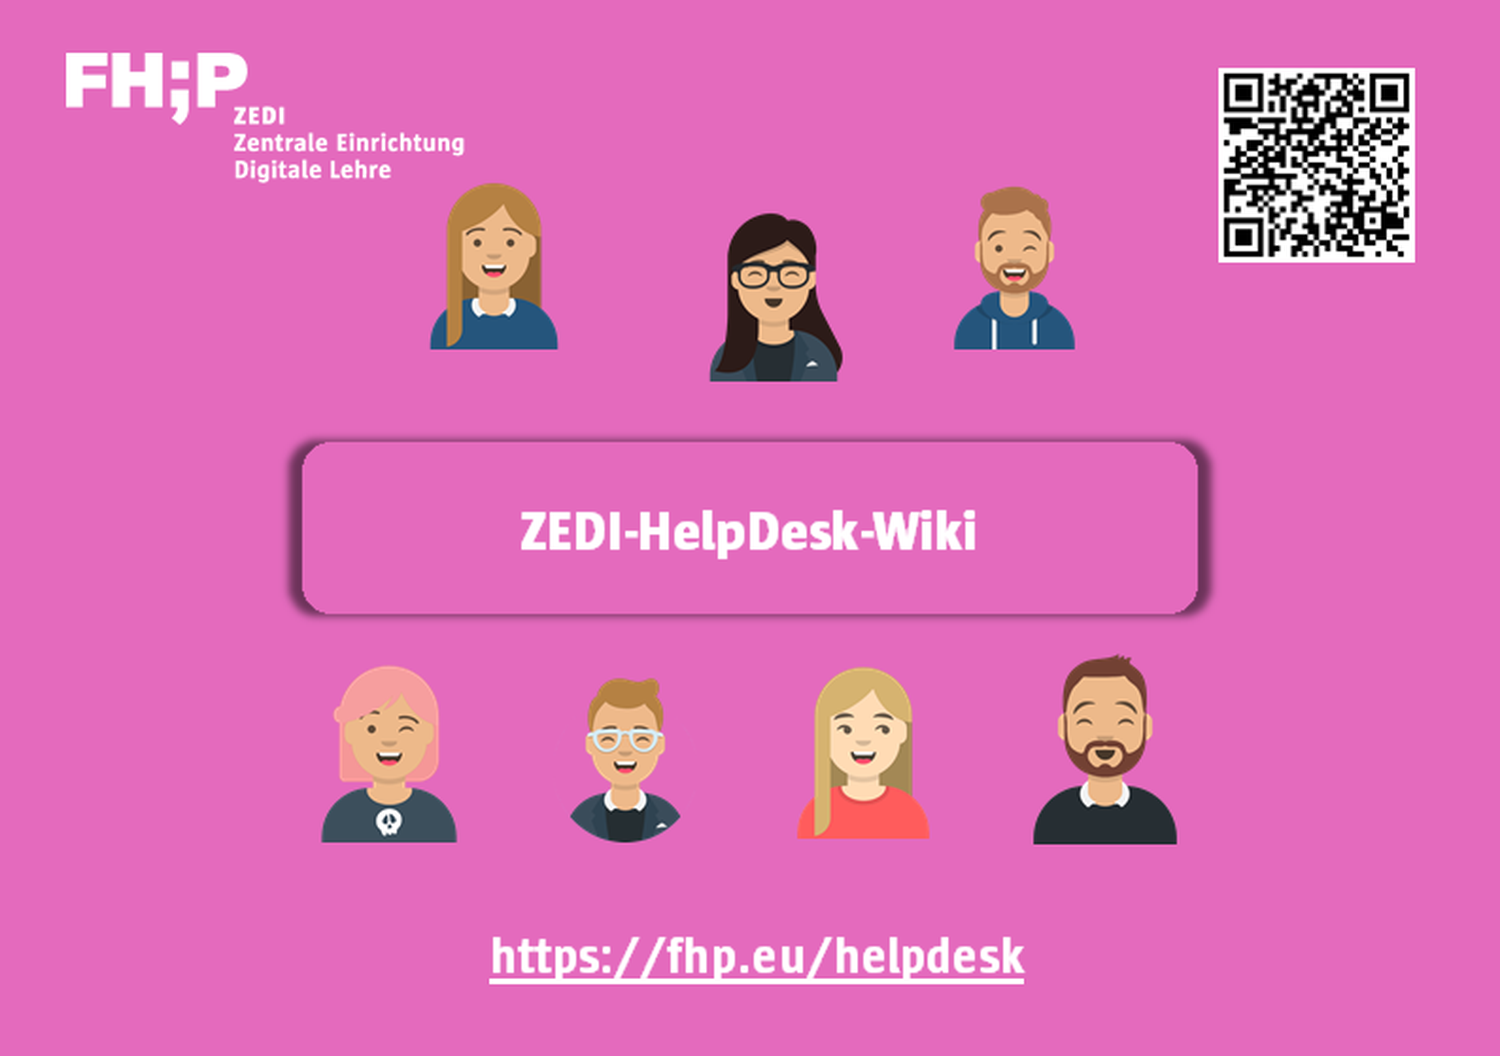 ZEDI-HelpDesk-Wiki Flyer